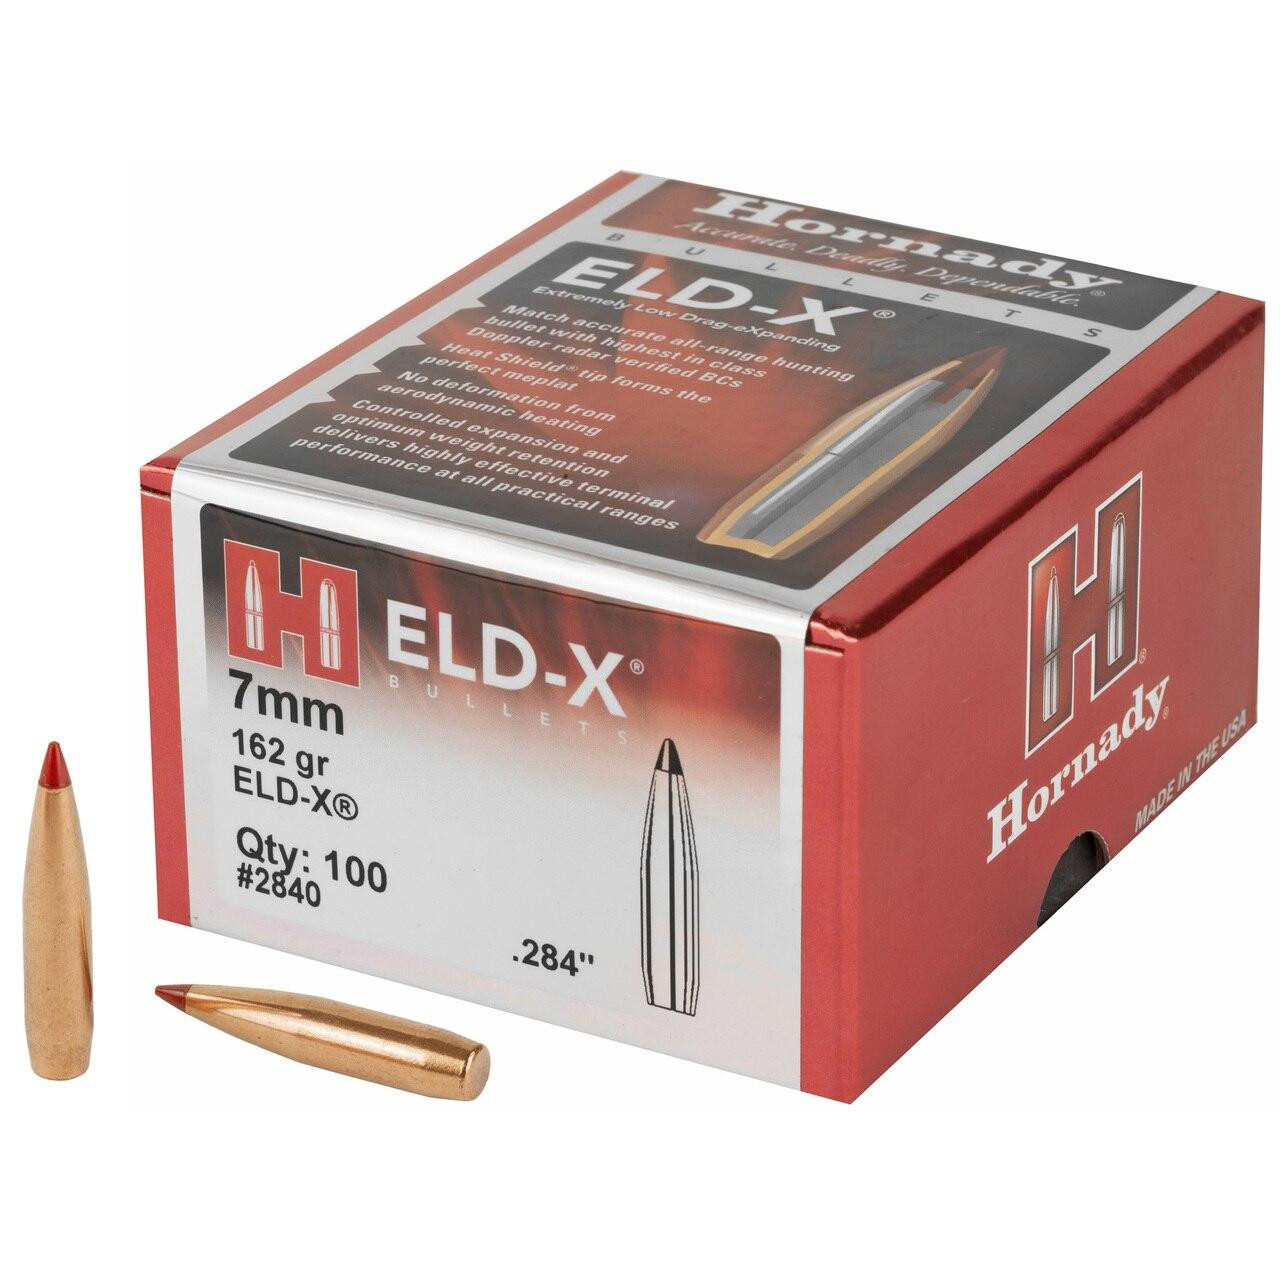 Hornady Hrndy Eld-x 7mm .284 162gr 100ct 090255228403